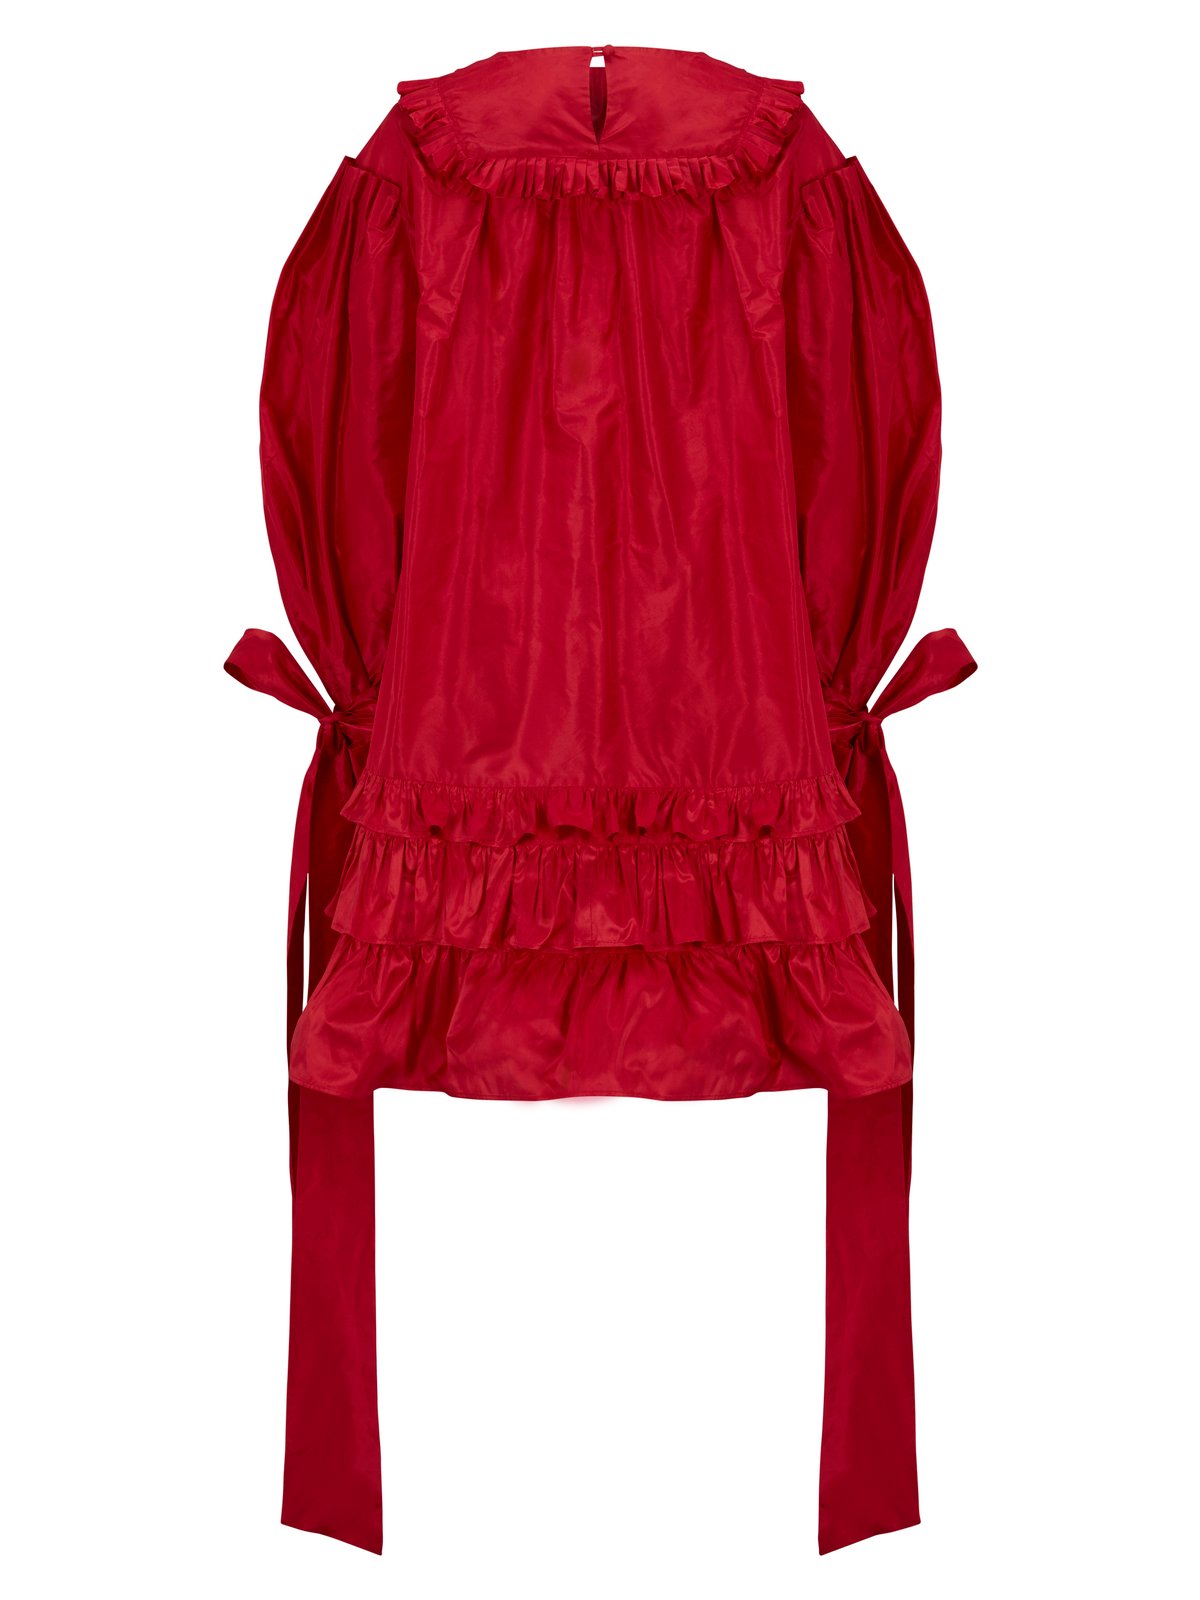 Image of Cardinal Red Silk Taffeta Dress 